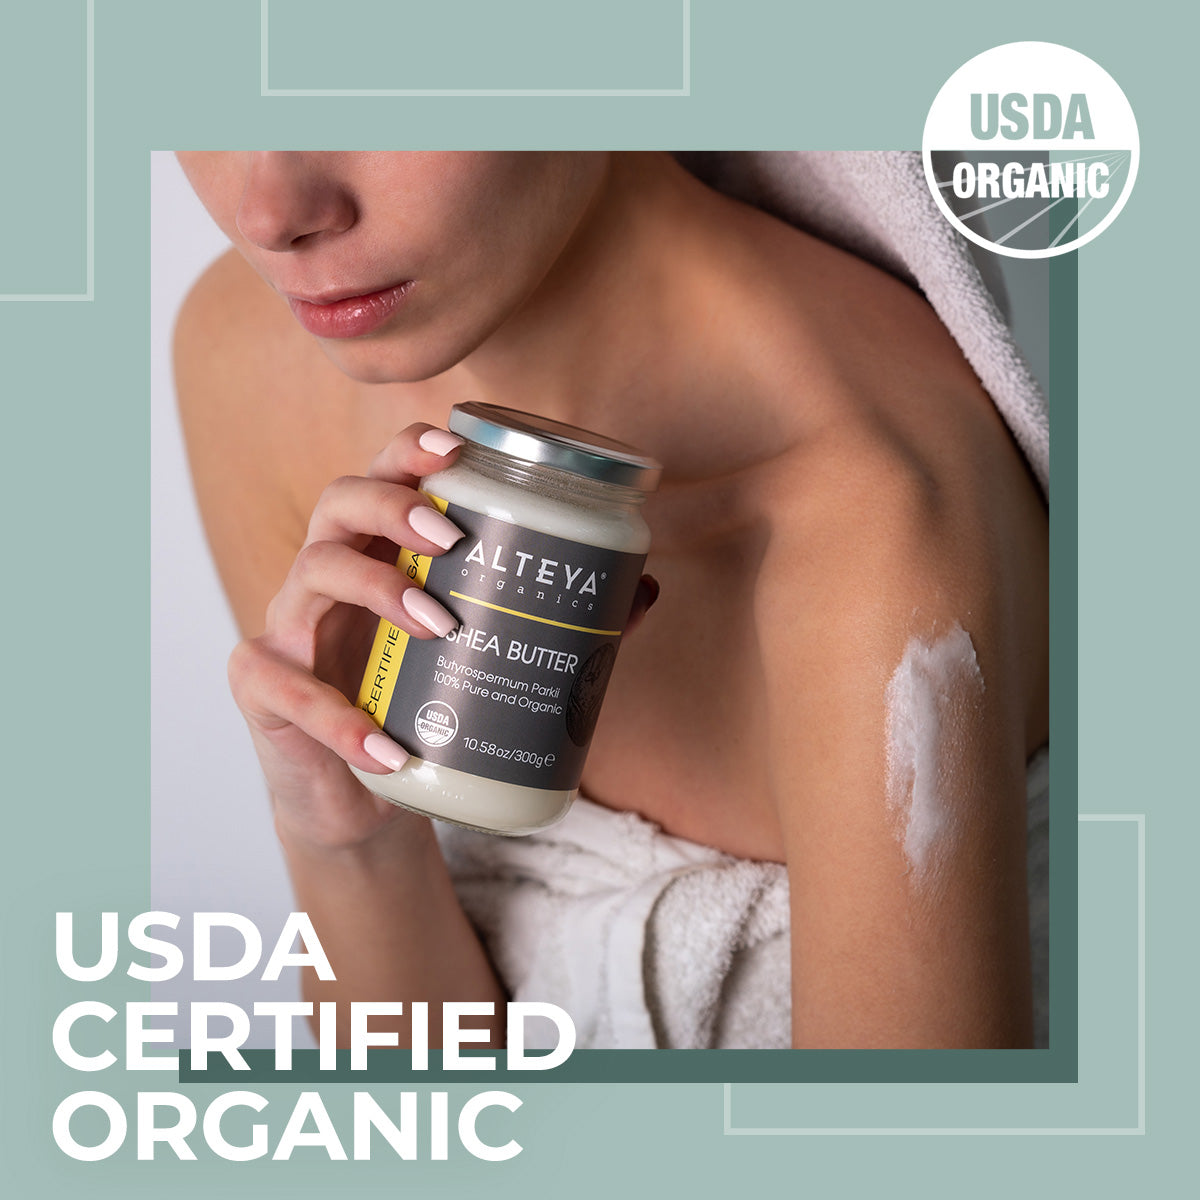 A woman holding a jar of Alteya Organics' Shea Butter - USDA Organic - 10.58 Oz/300g Glass Jar to moisturize and protect skin.